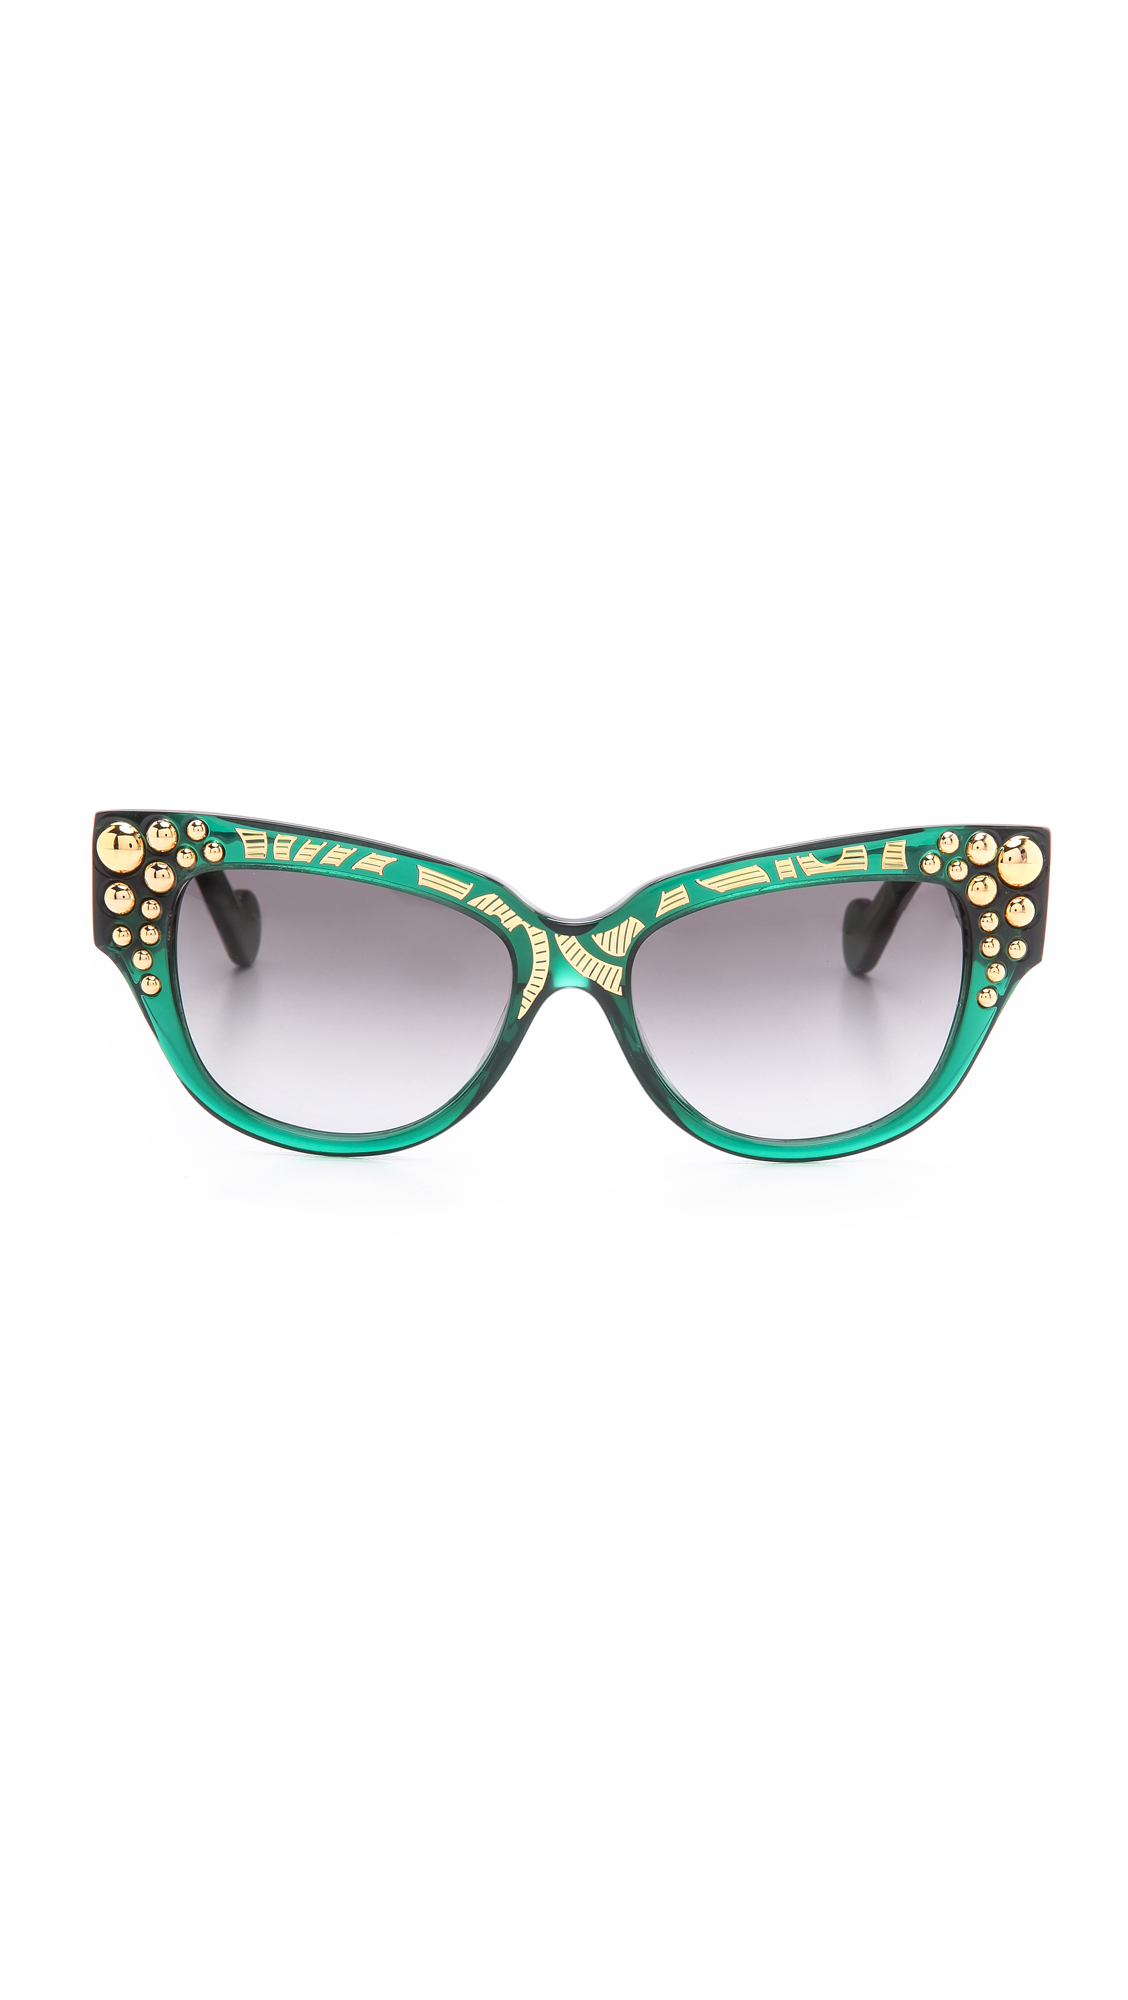 Lyst - Anna Karin Karlsson Mademoiselle D'Or Sunglasses - Emerald/Gold ...